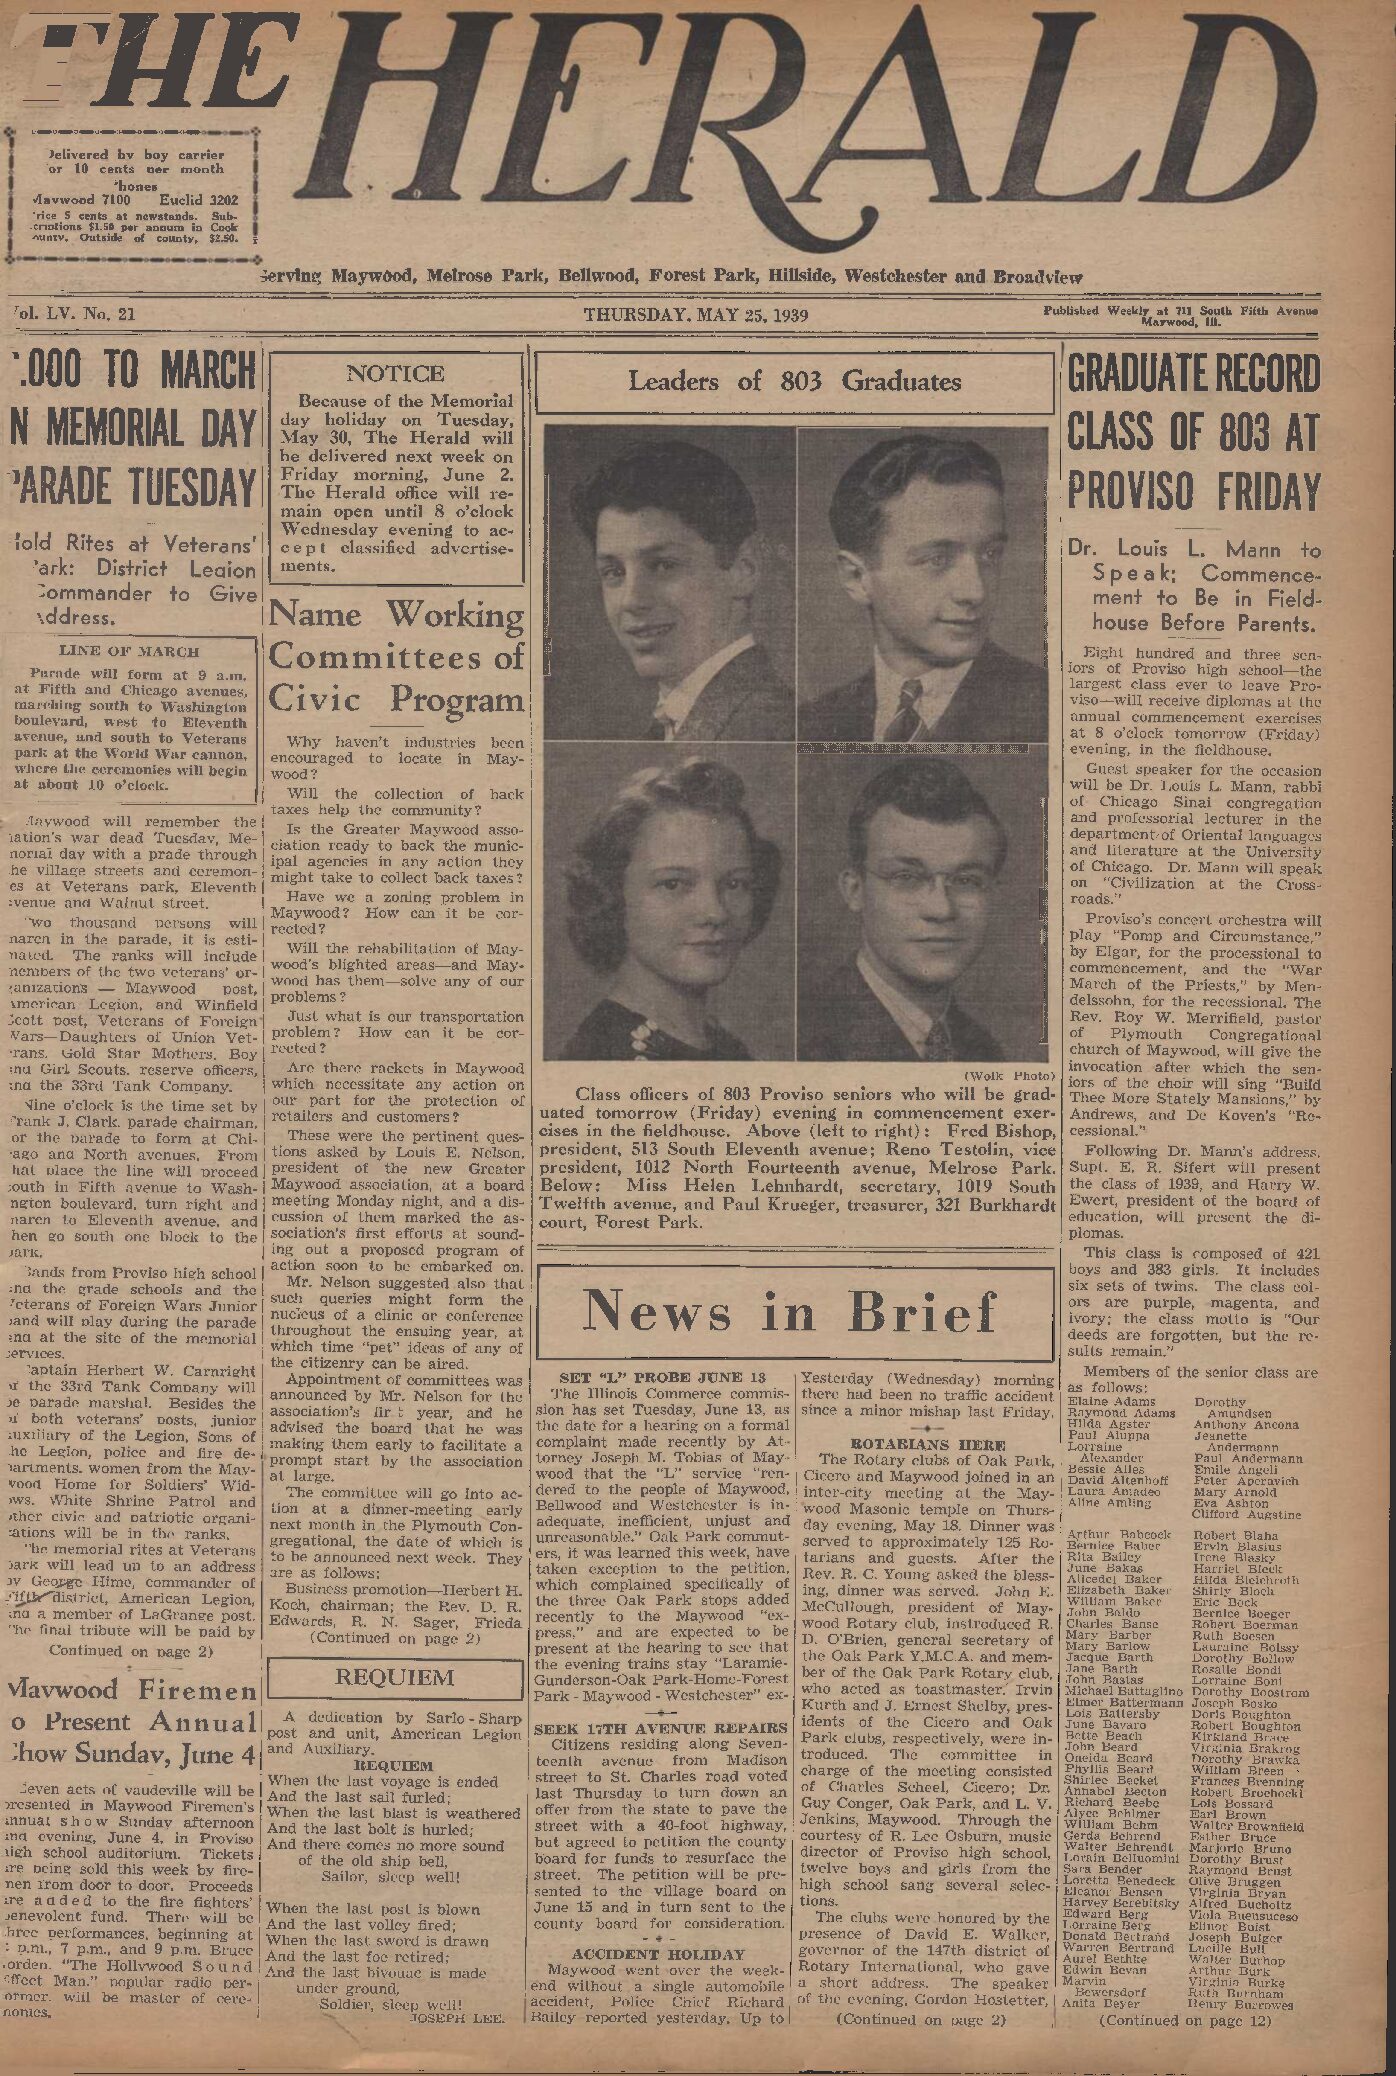 The Herald – 19390525